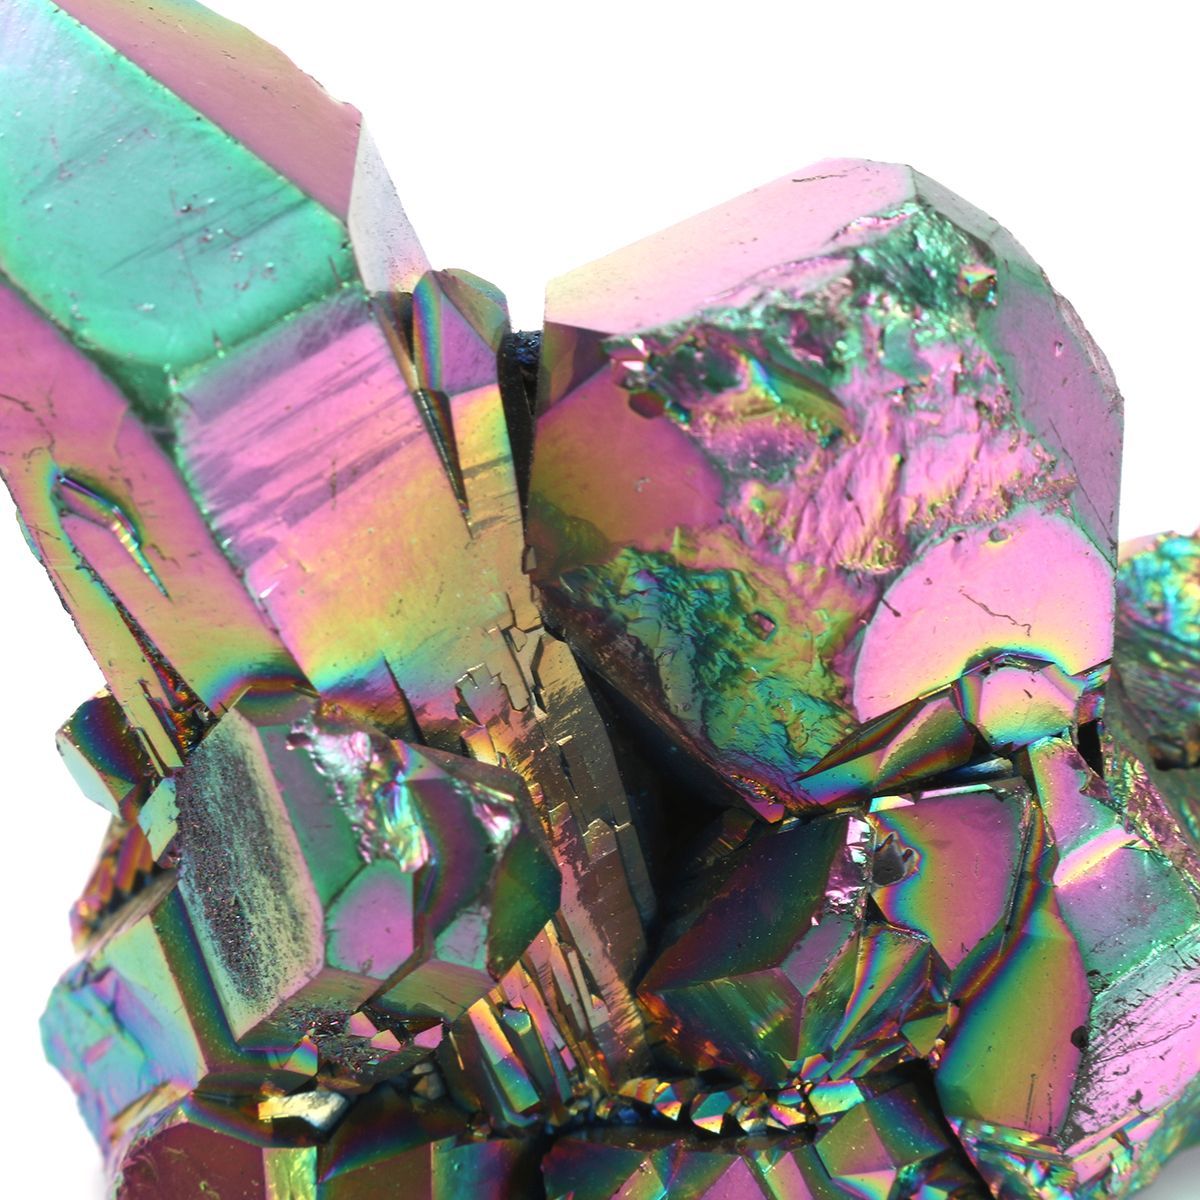 Rainbow-Titanium-Coated-Drusy-Quartz-Crystals-Geode-Gemstone-Mineral-Rocks-Decorations-1573667